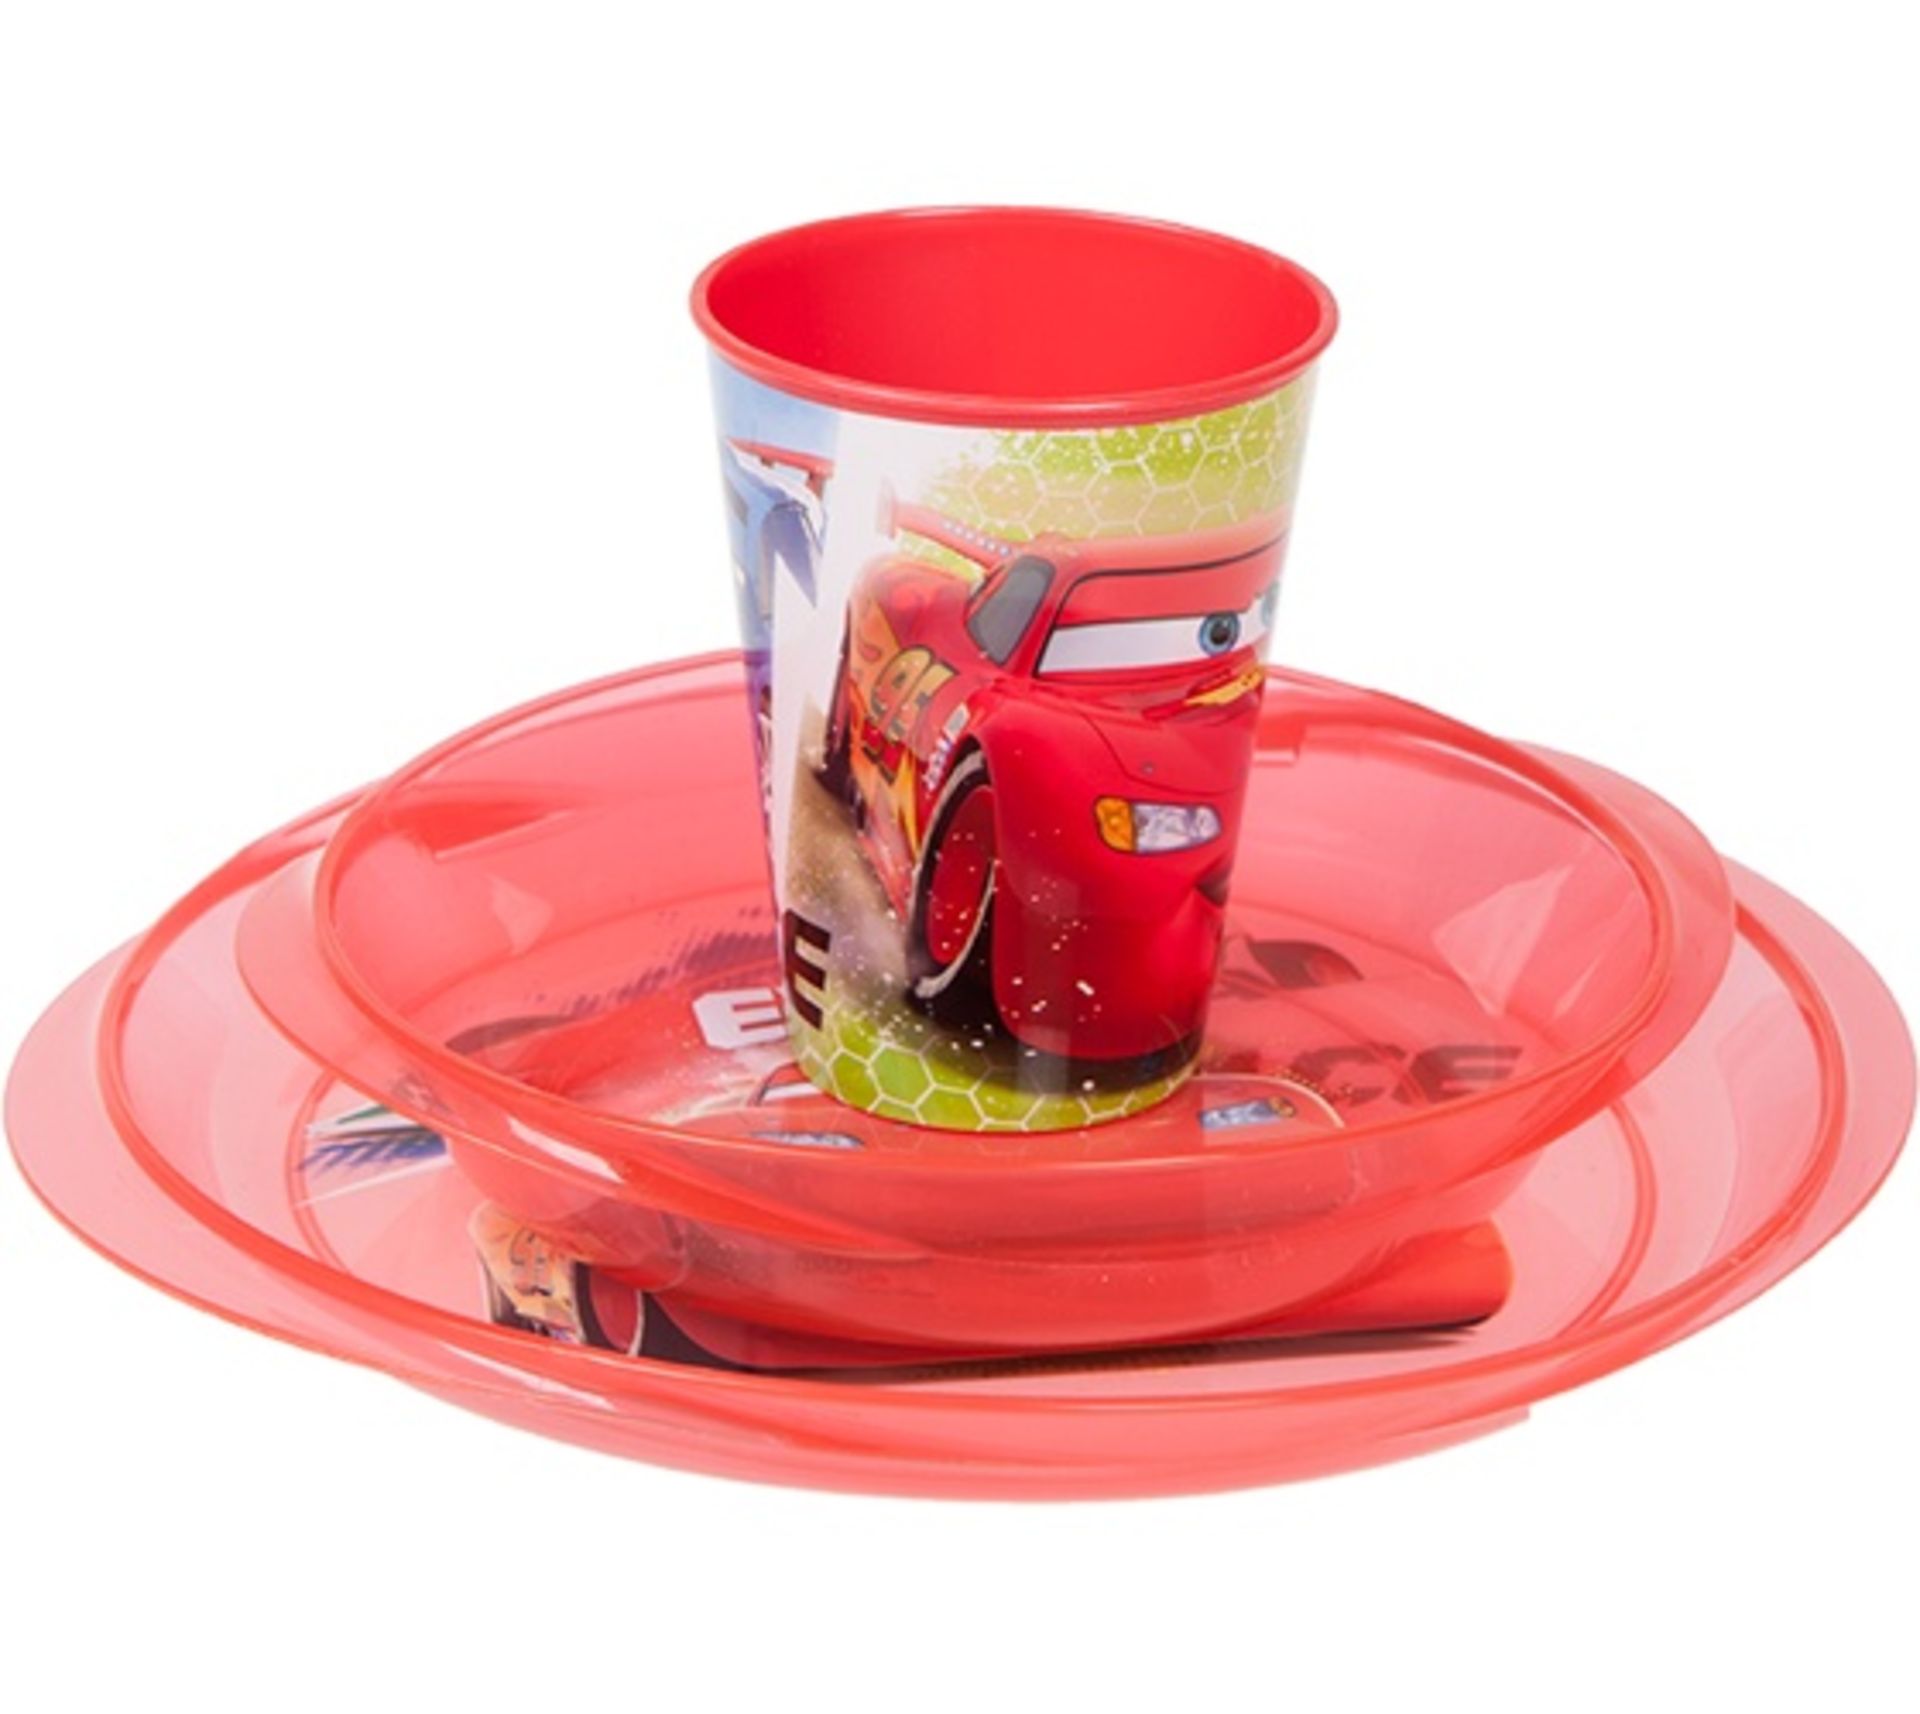 + VAT Brand New Disney Pixar Cars Microwavable 3 Piece Lunch Set